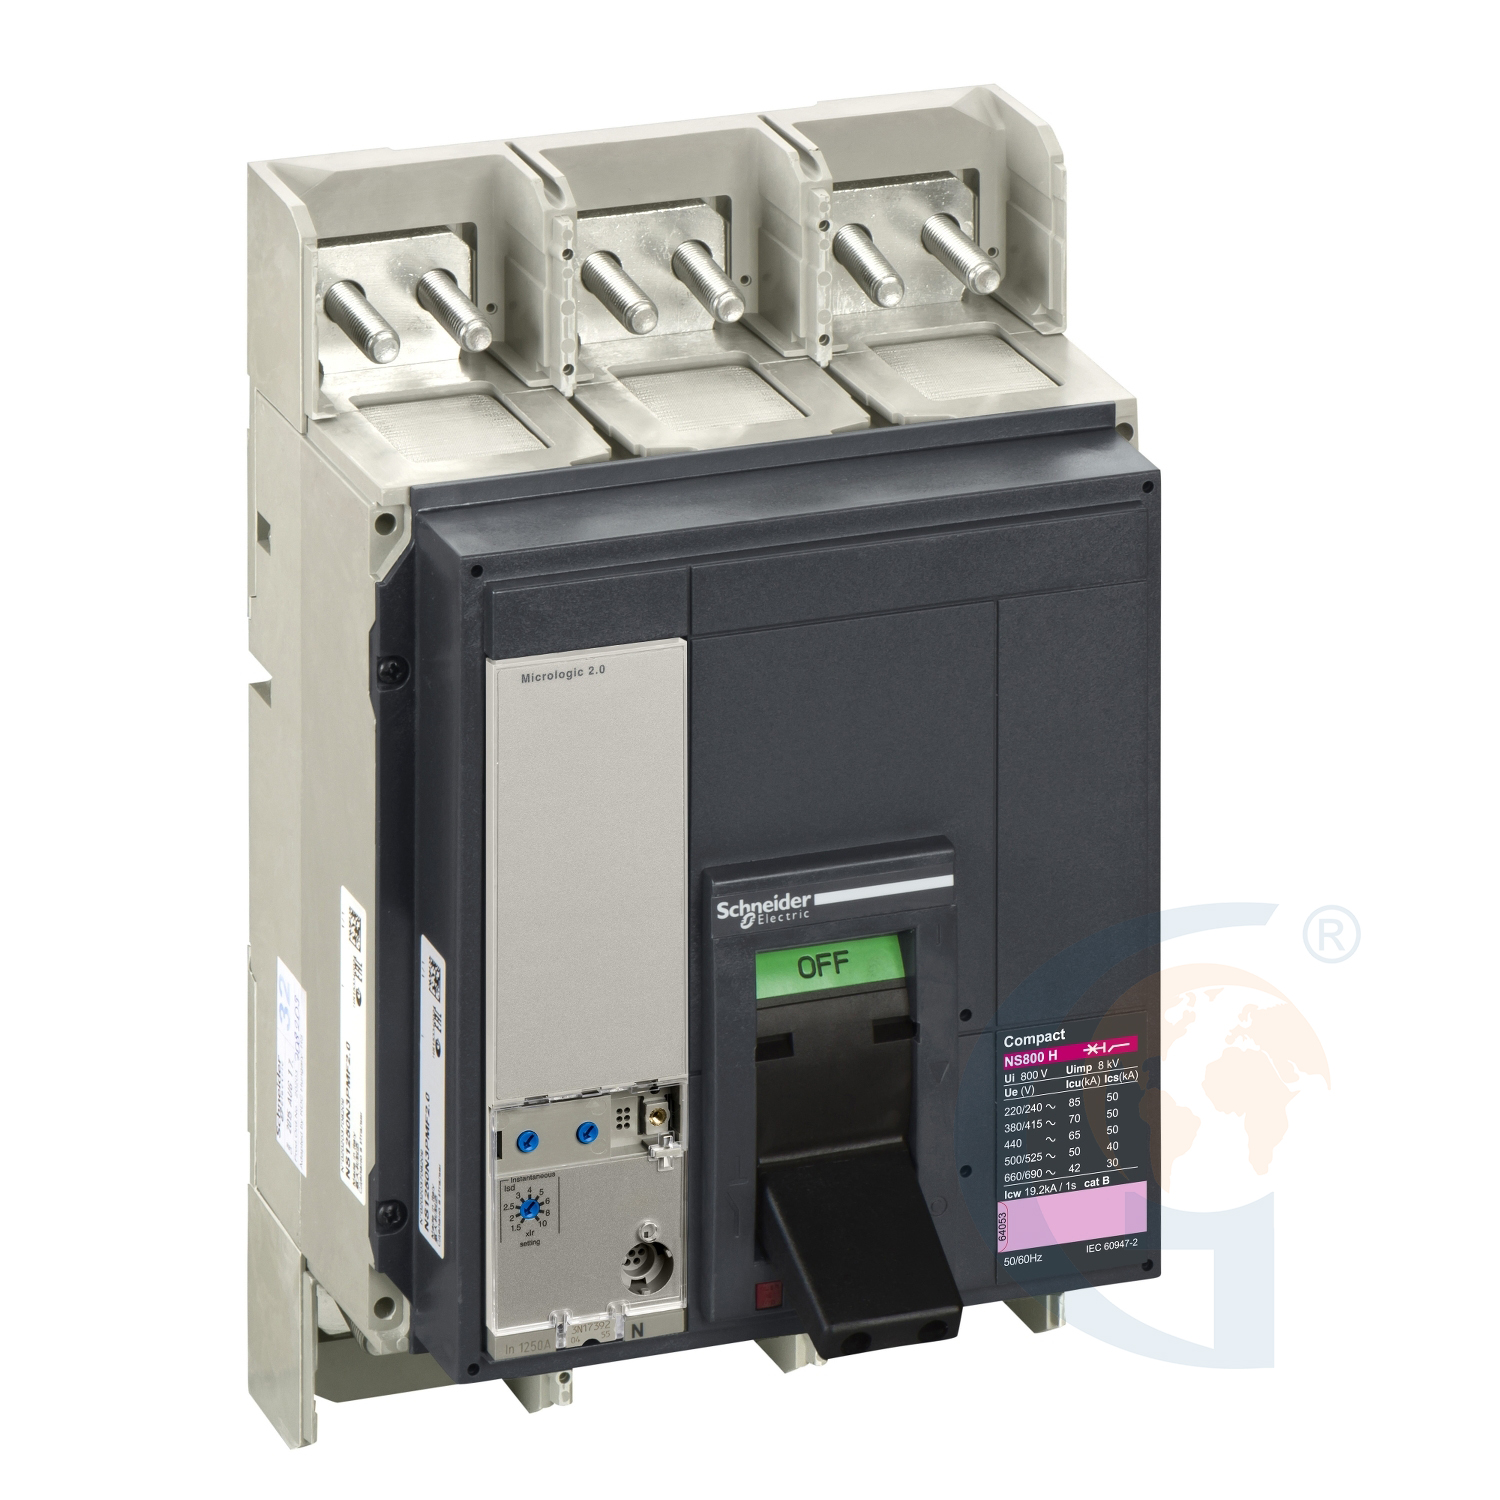 Schneider Electric 34425 circuit breaker Compact NS800H – Micrologic 5.0 E – 800 A – 3 poles 3t https://gesrepair.com/wp-content/uploads/2020/Schneider/Schneider_Electric_34425_.jpg